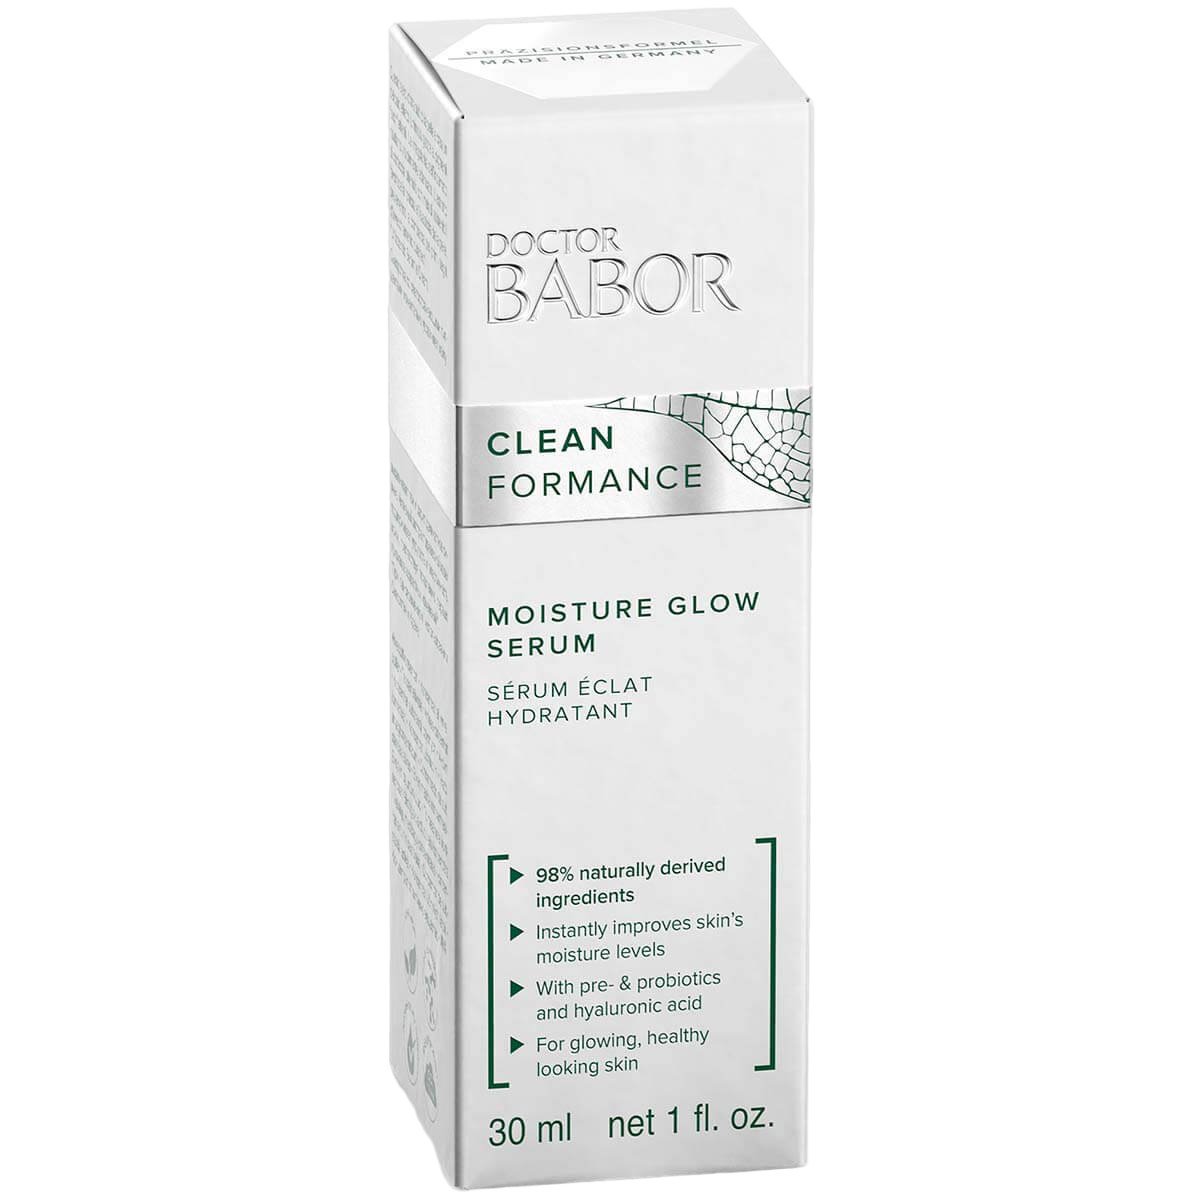 Зволожуюча сироватка Babor Doctor Babor Clean Formance Moisture Glow Serum, 50 мл - фото 2